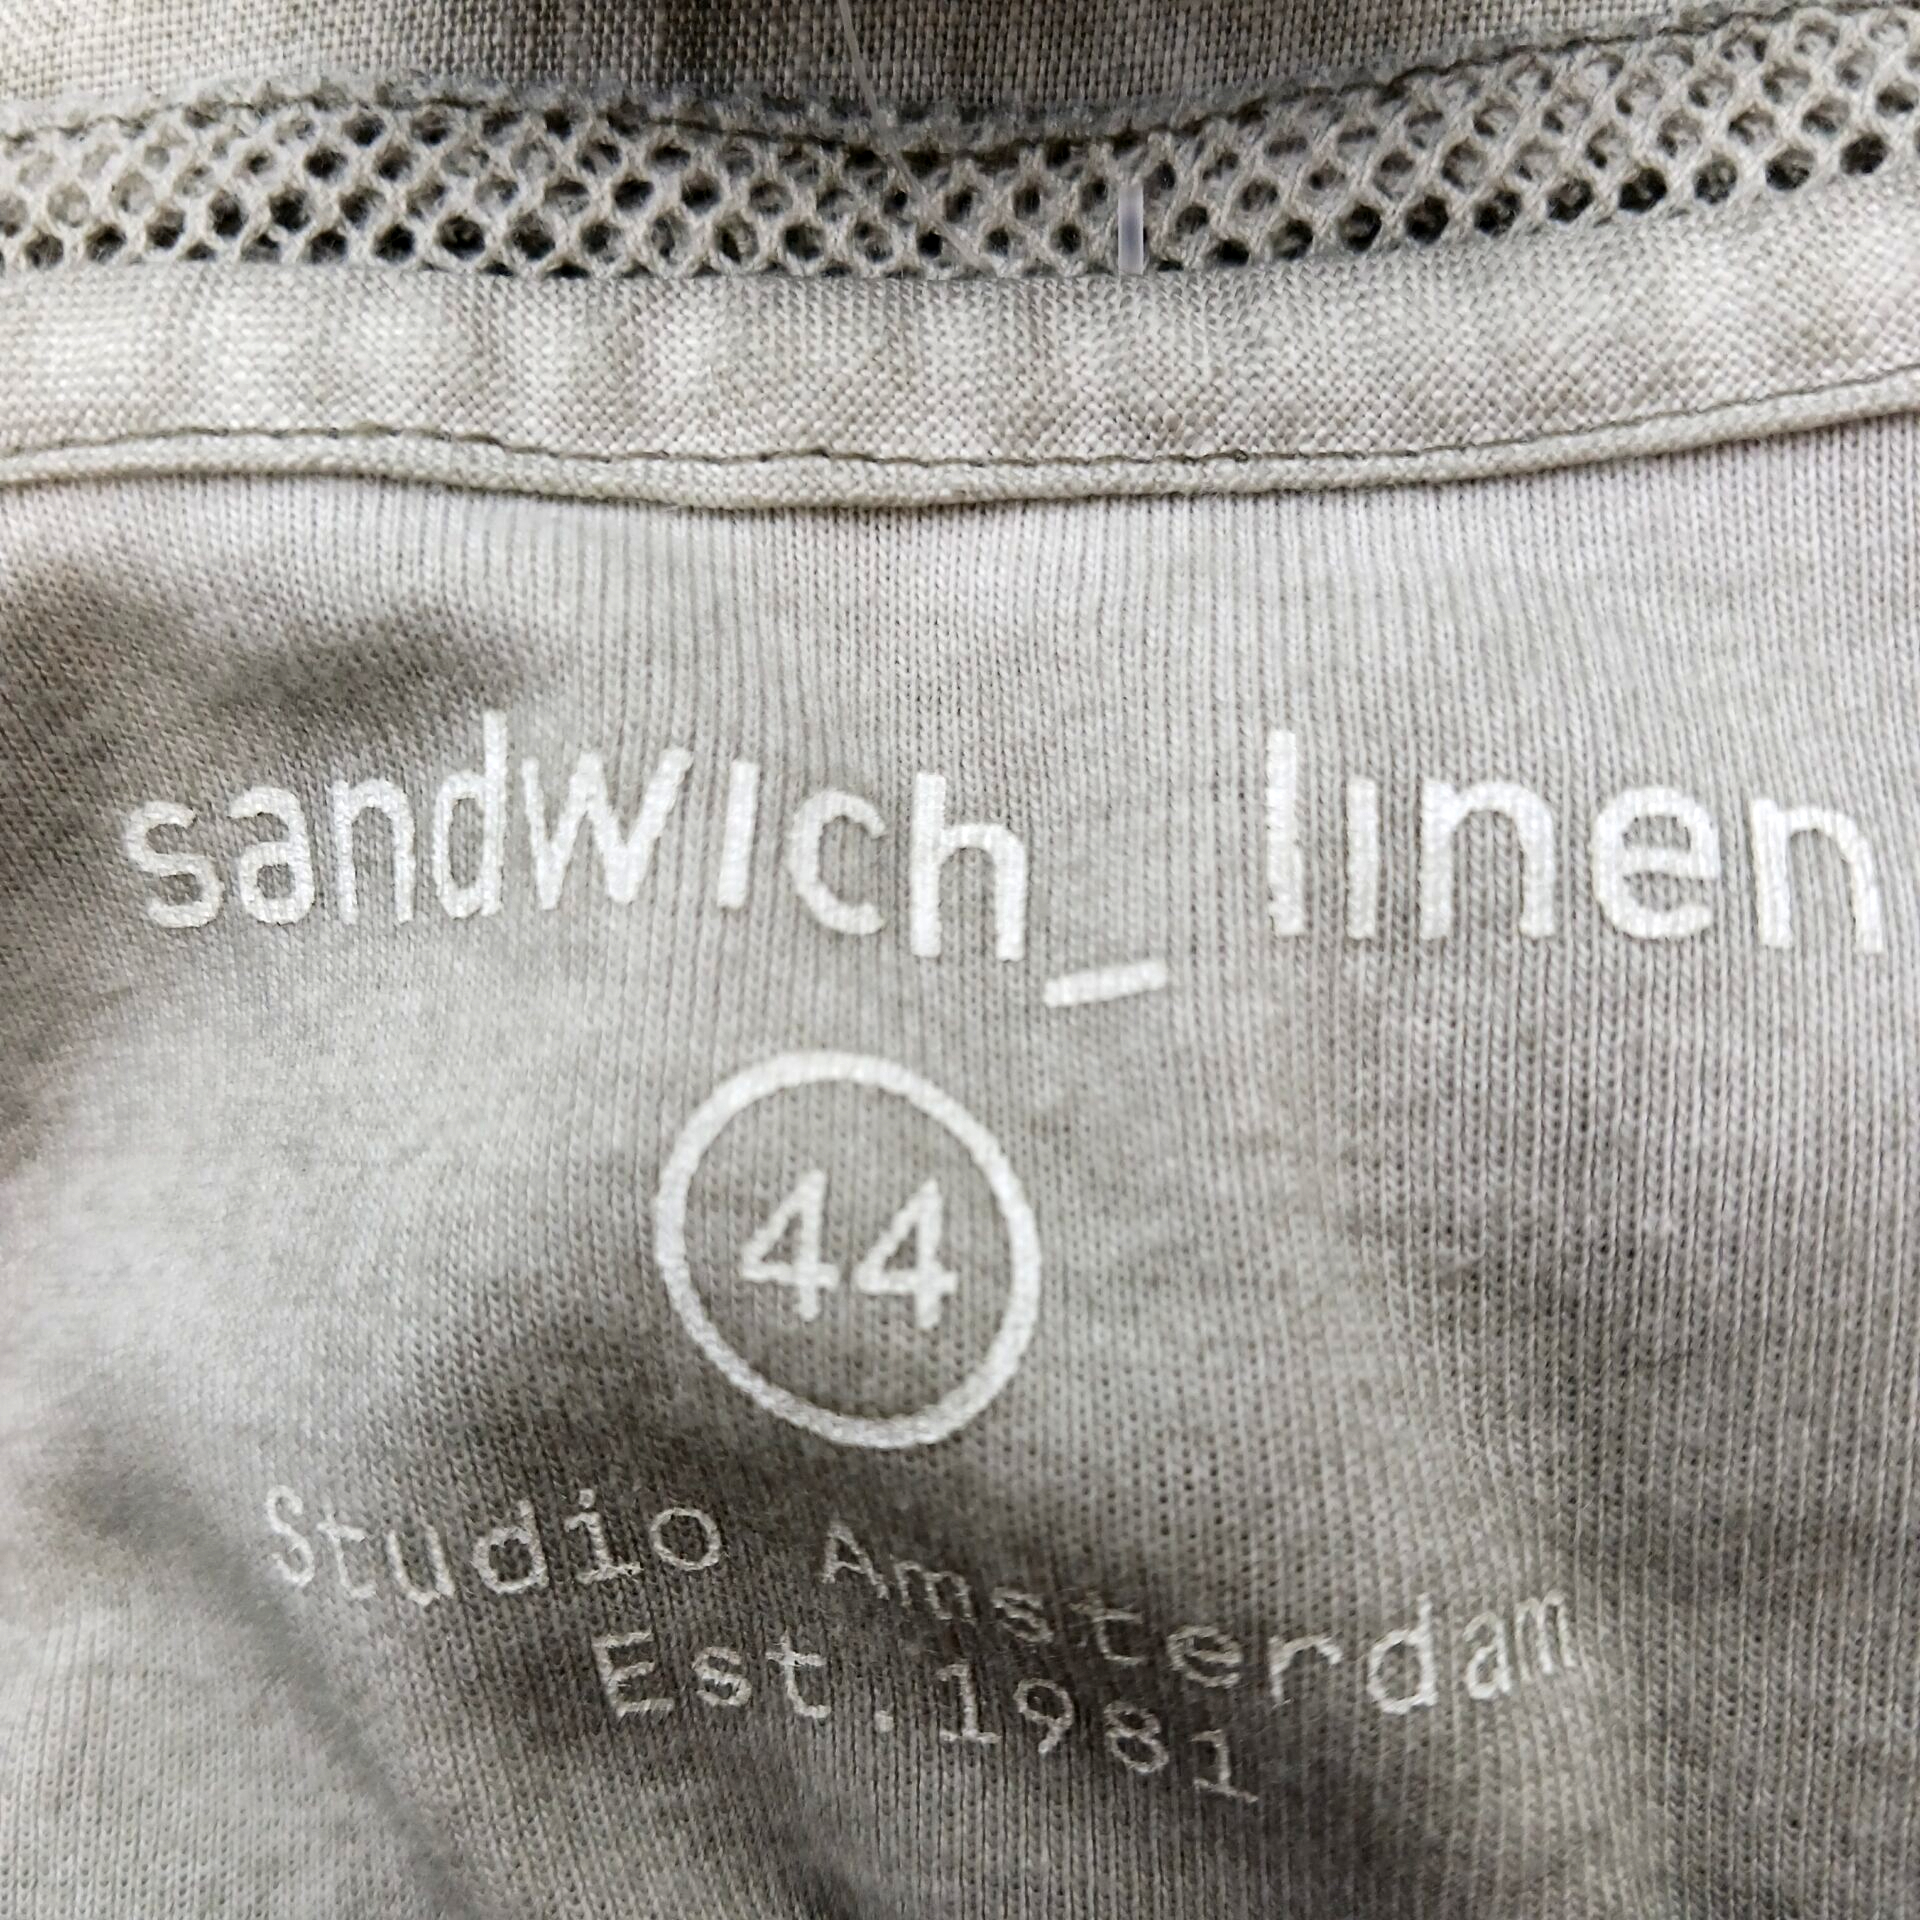 Sandwich Linen Dress - Size EU44 - St Richard's Hospice Shop